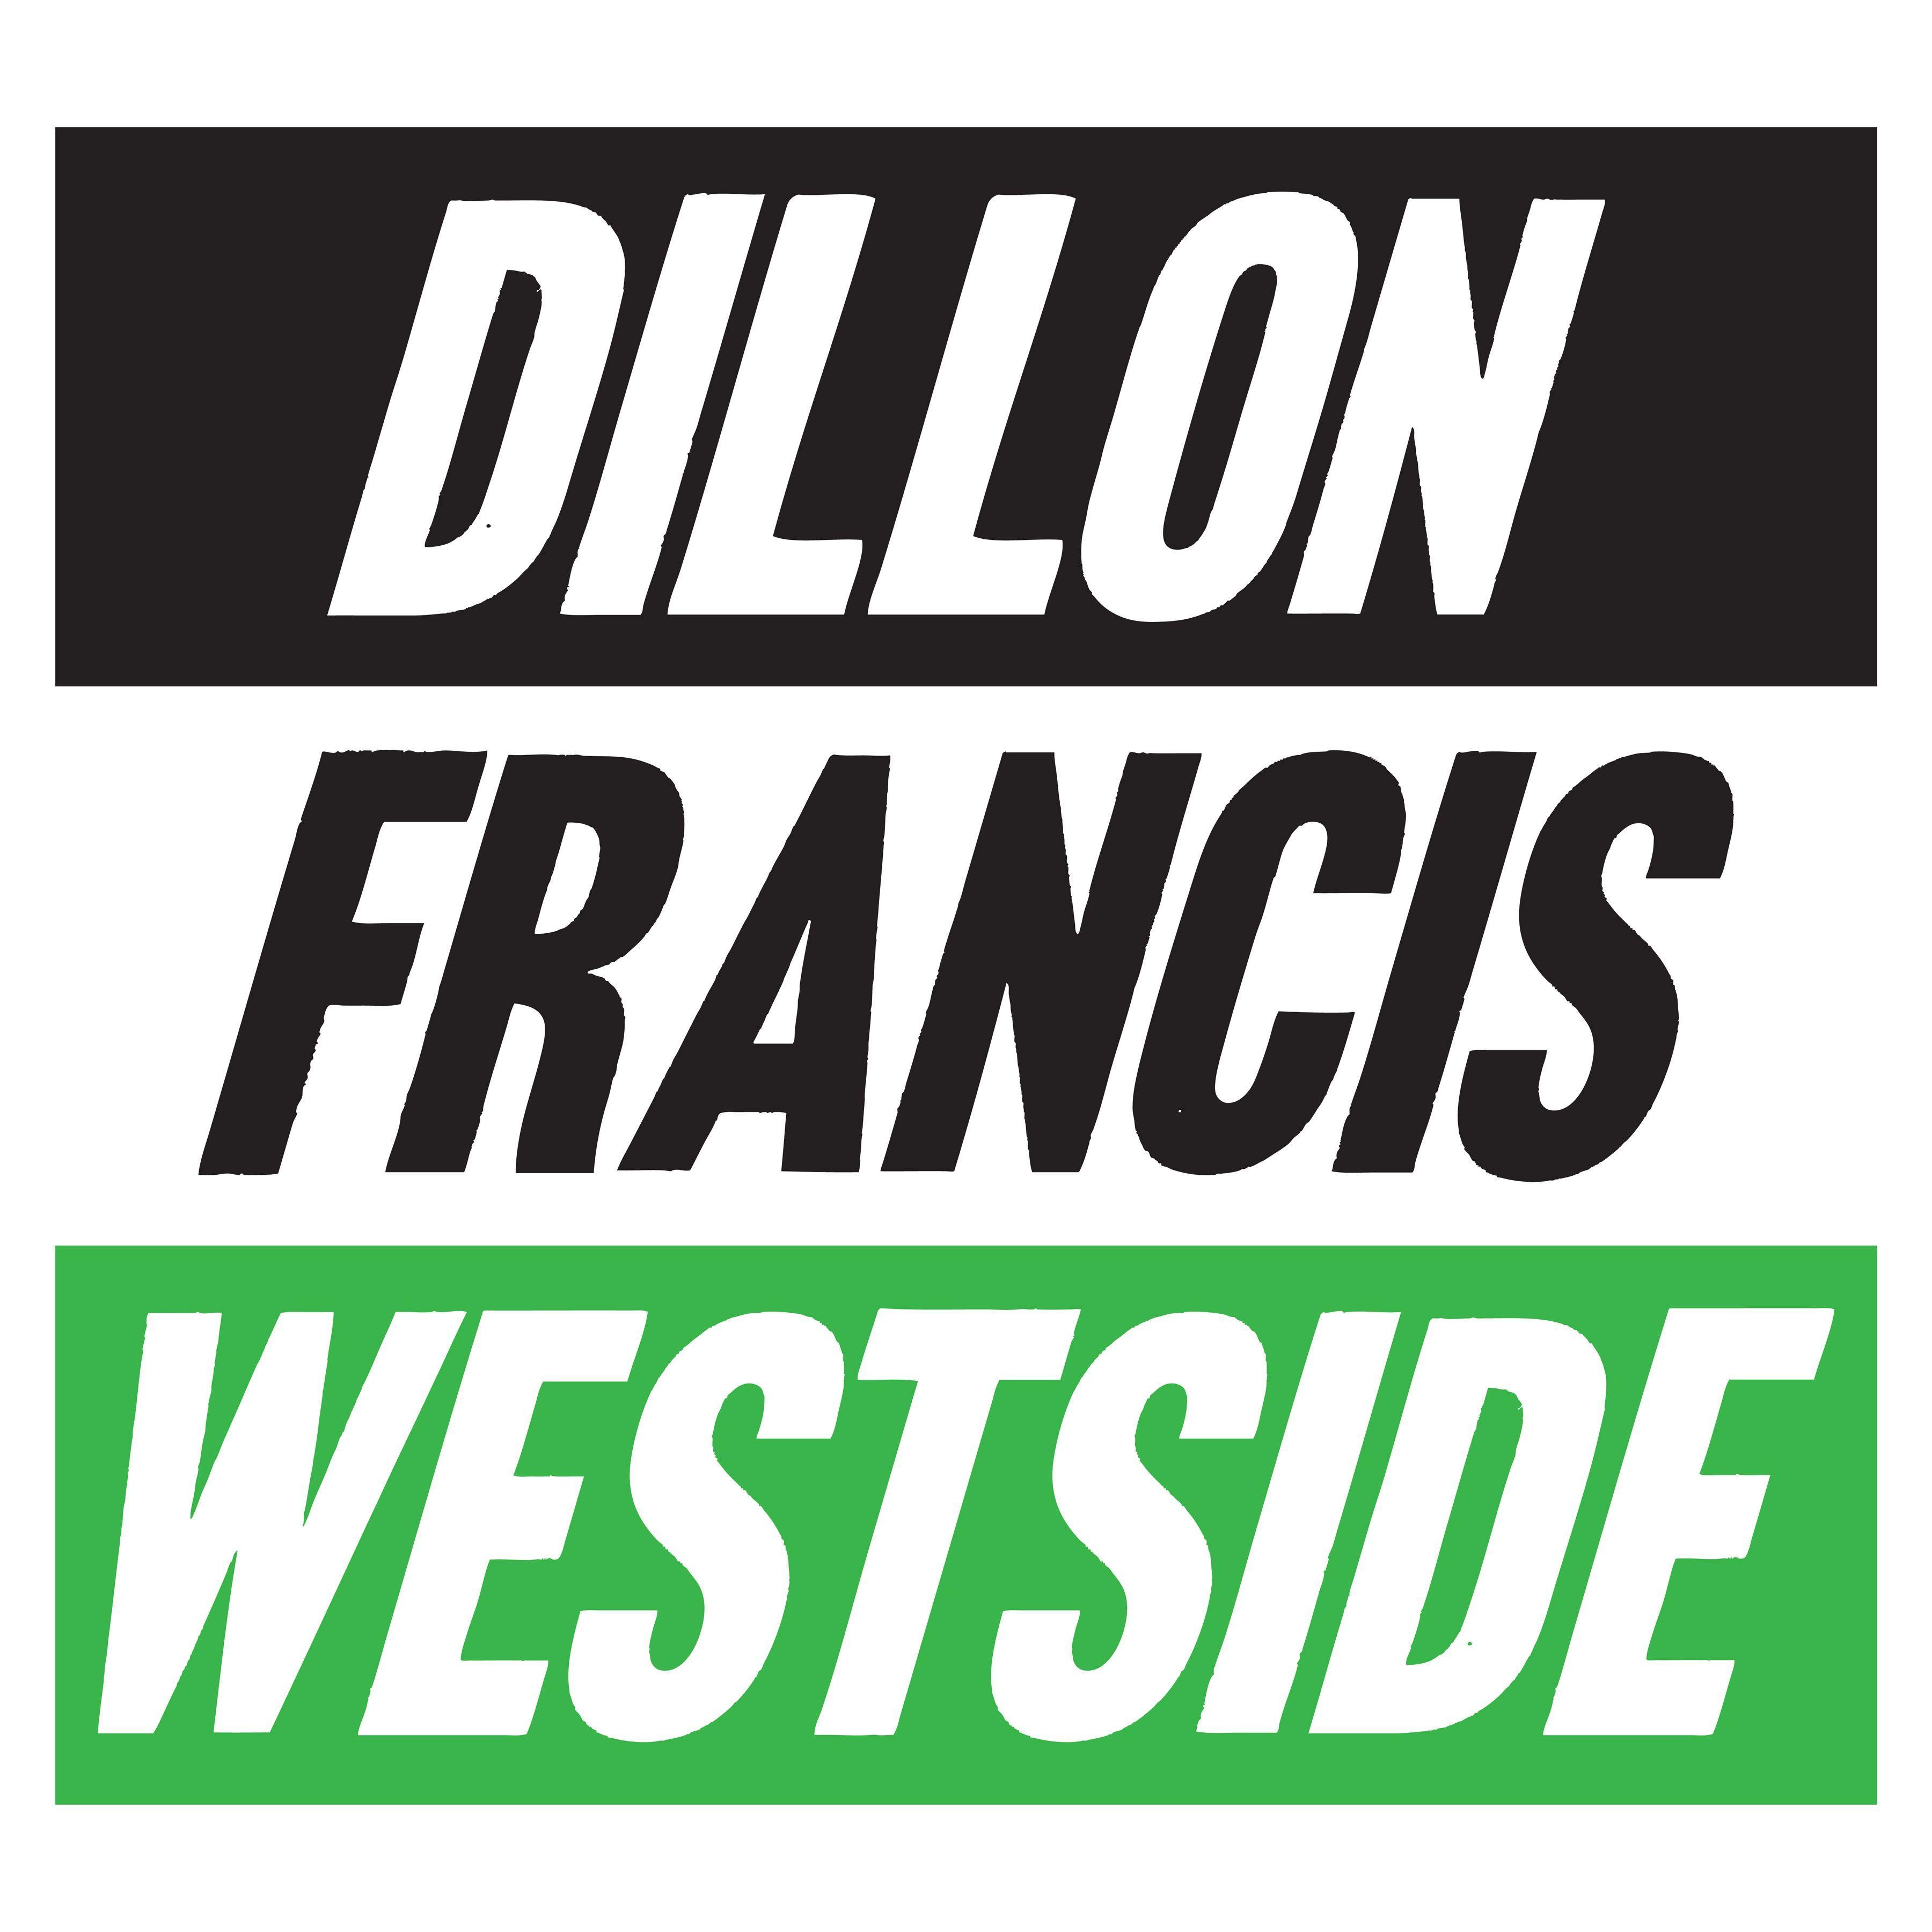 Dillion Francis Logo - Westside! - Dillon Francis mp3 buy, full tracklist